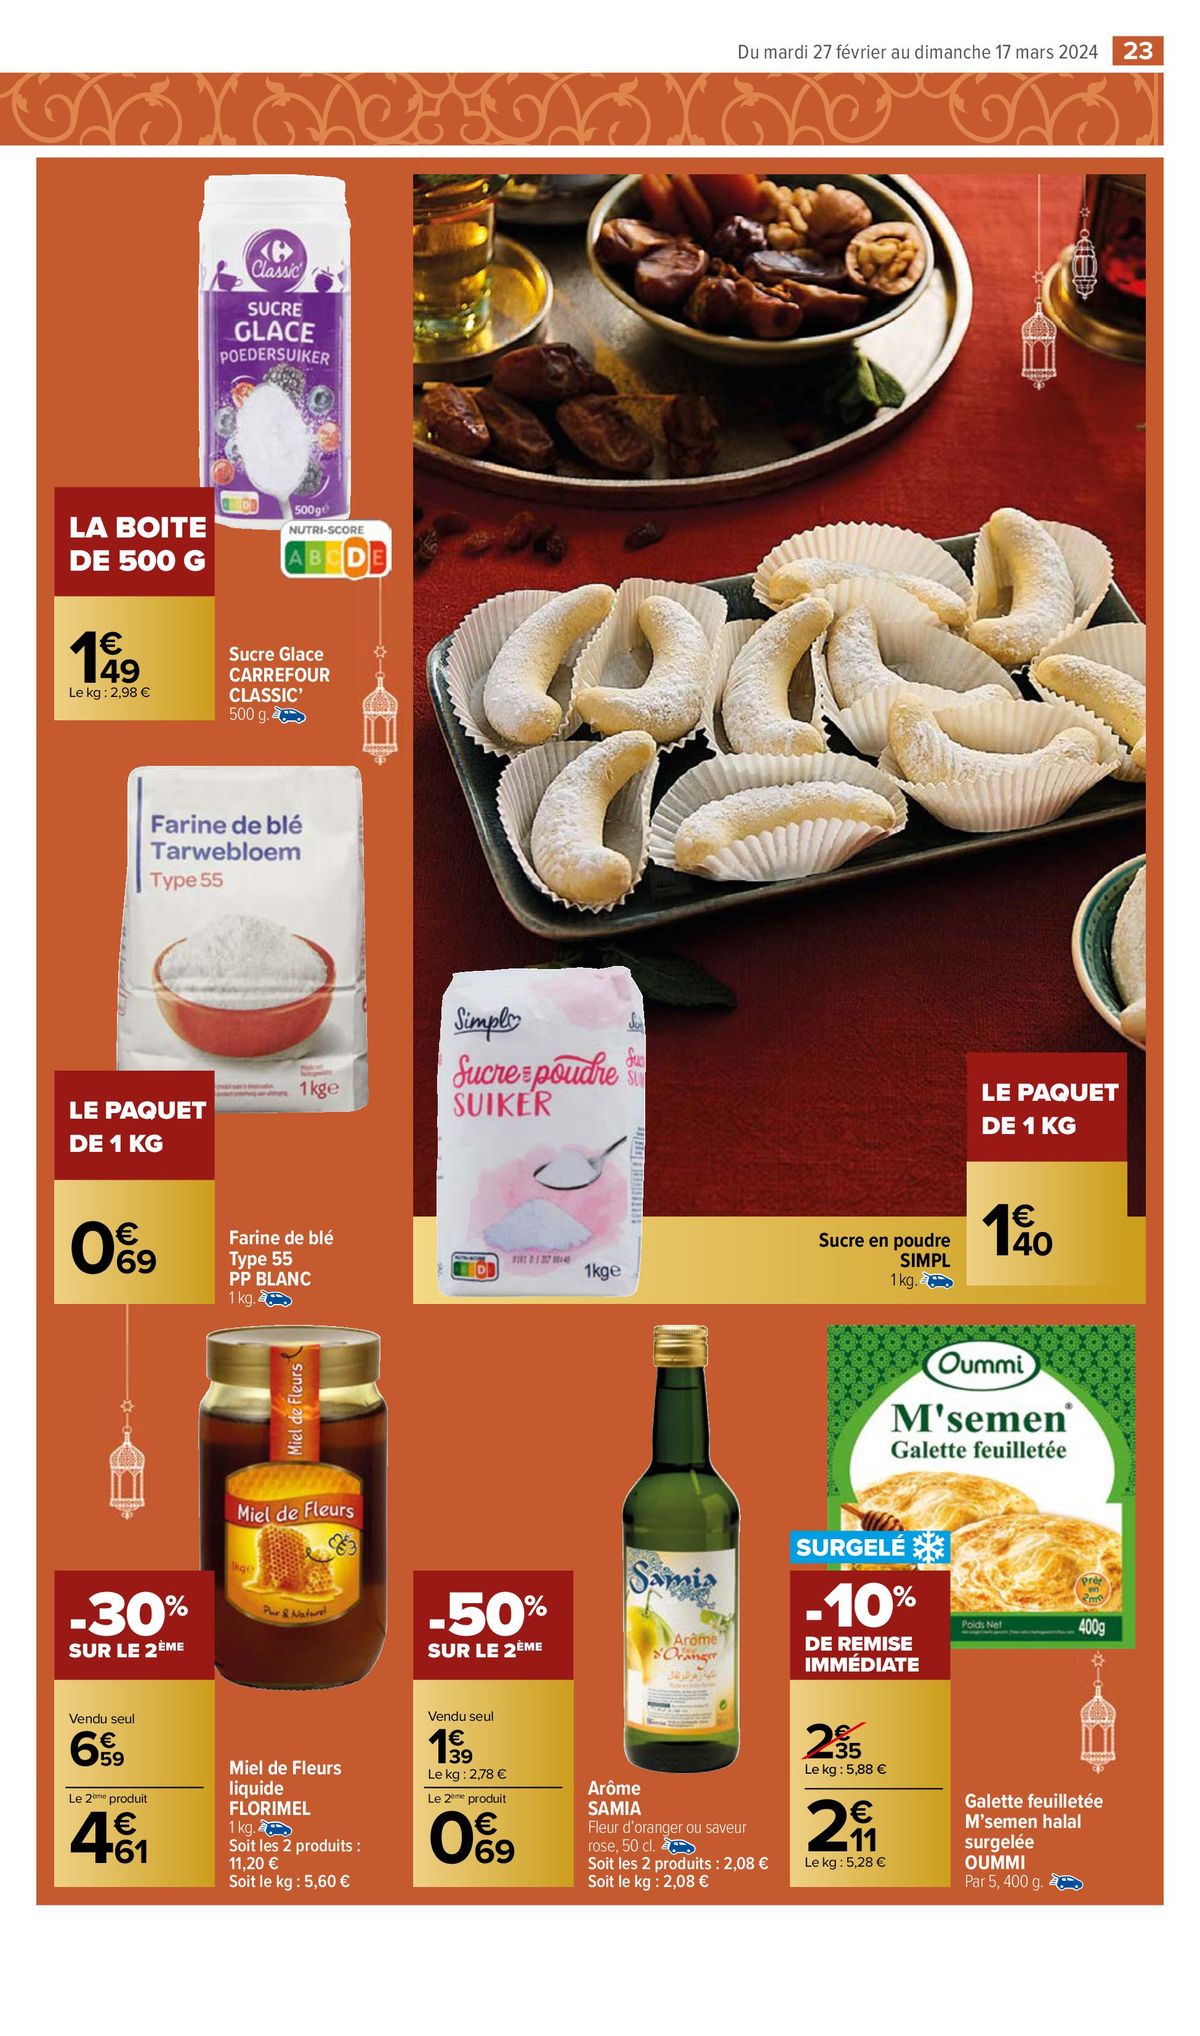 Catalogue Ramadan à petits prix !, page 00025